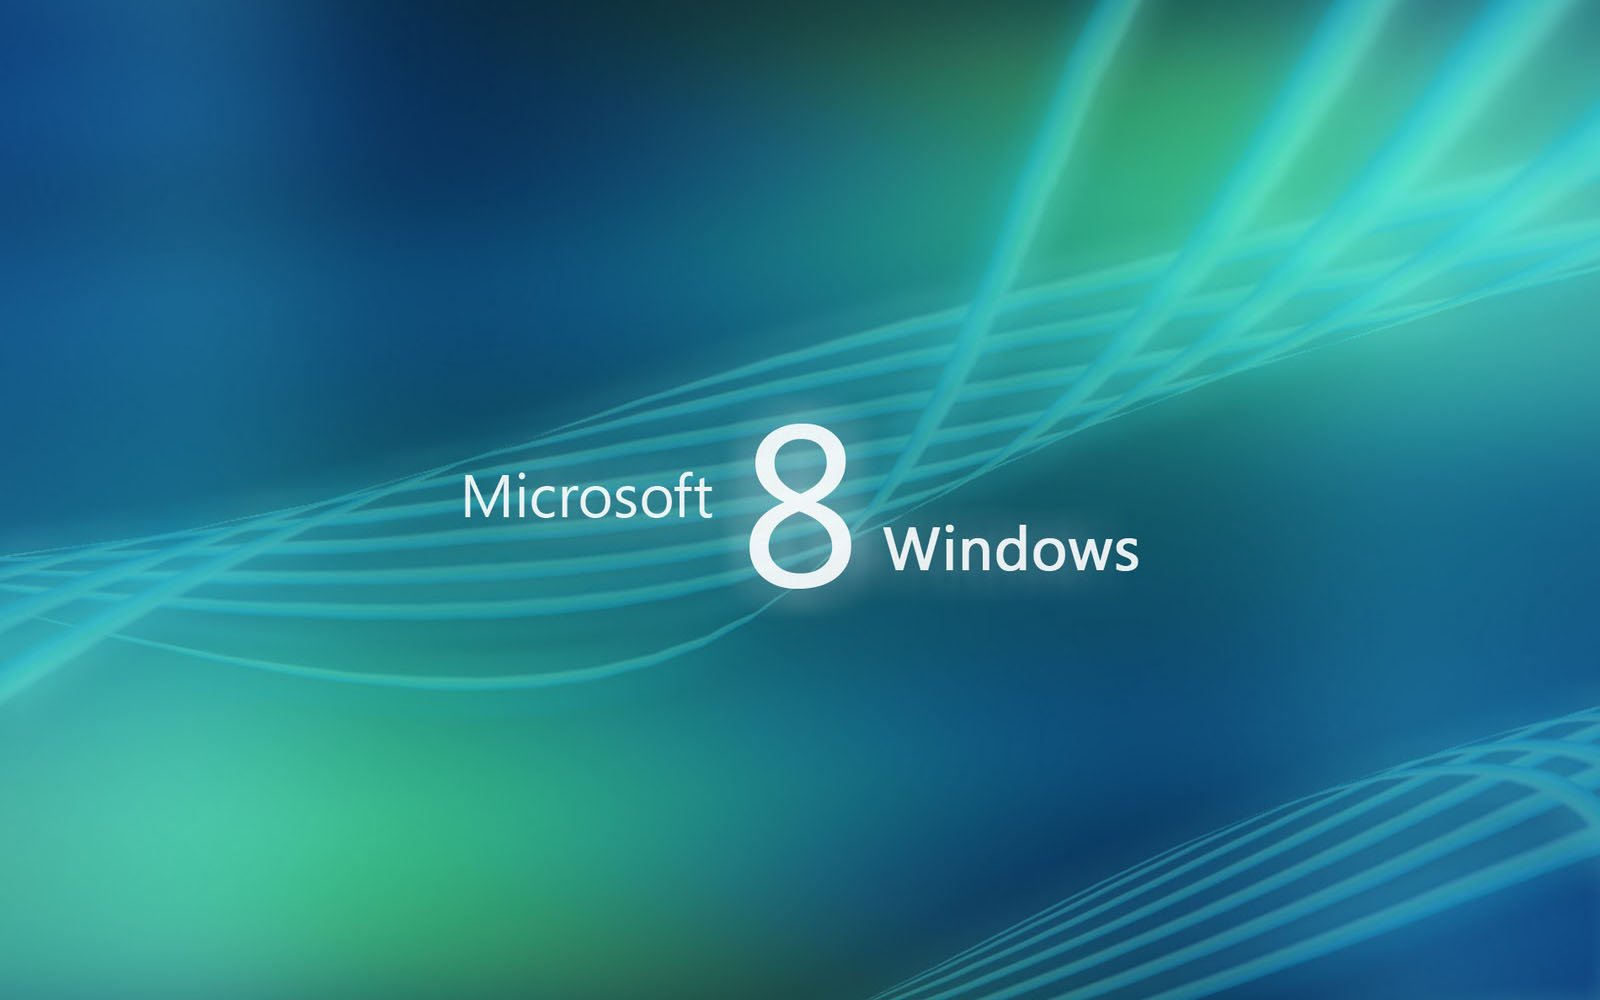 The Windows Themes Windows Latest Desktop Background Themes